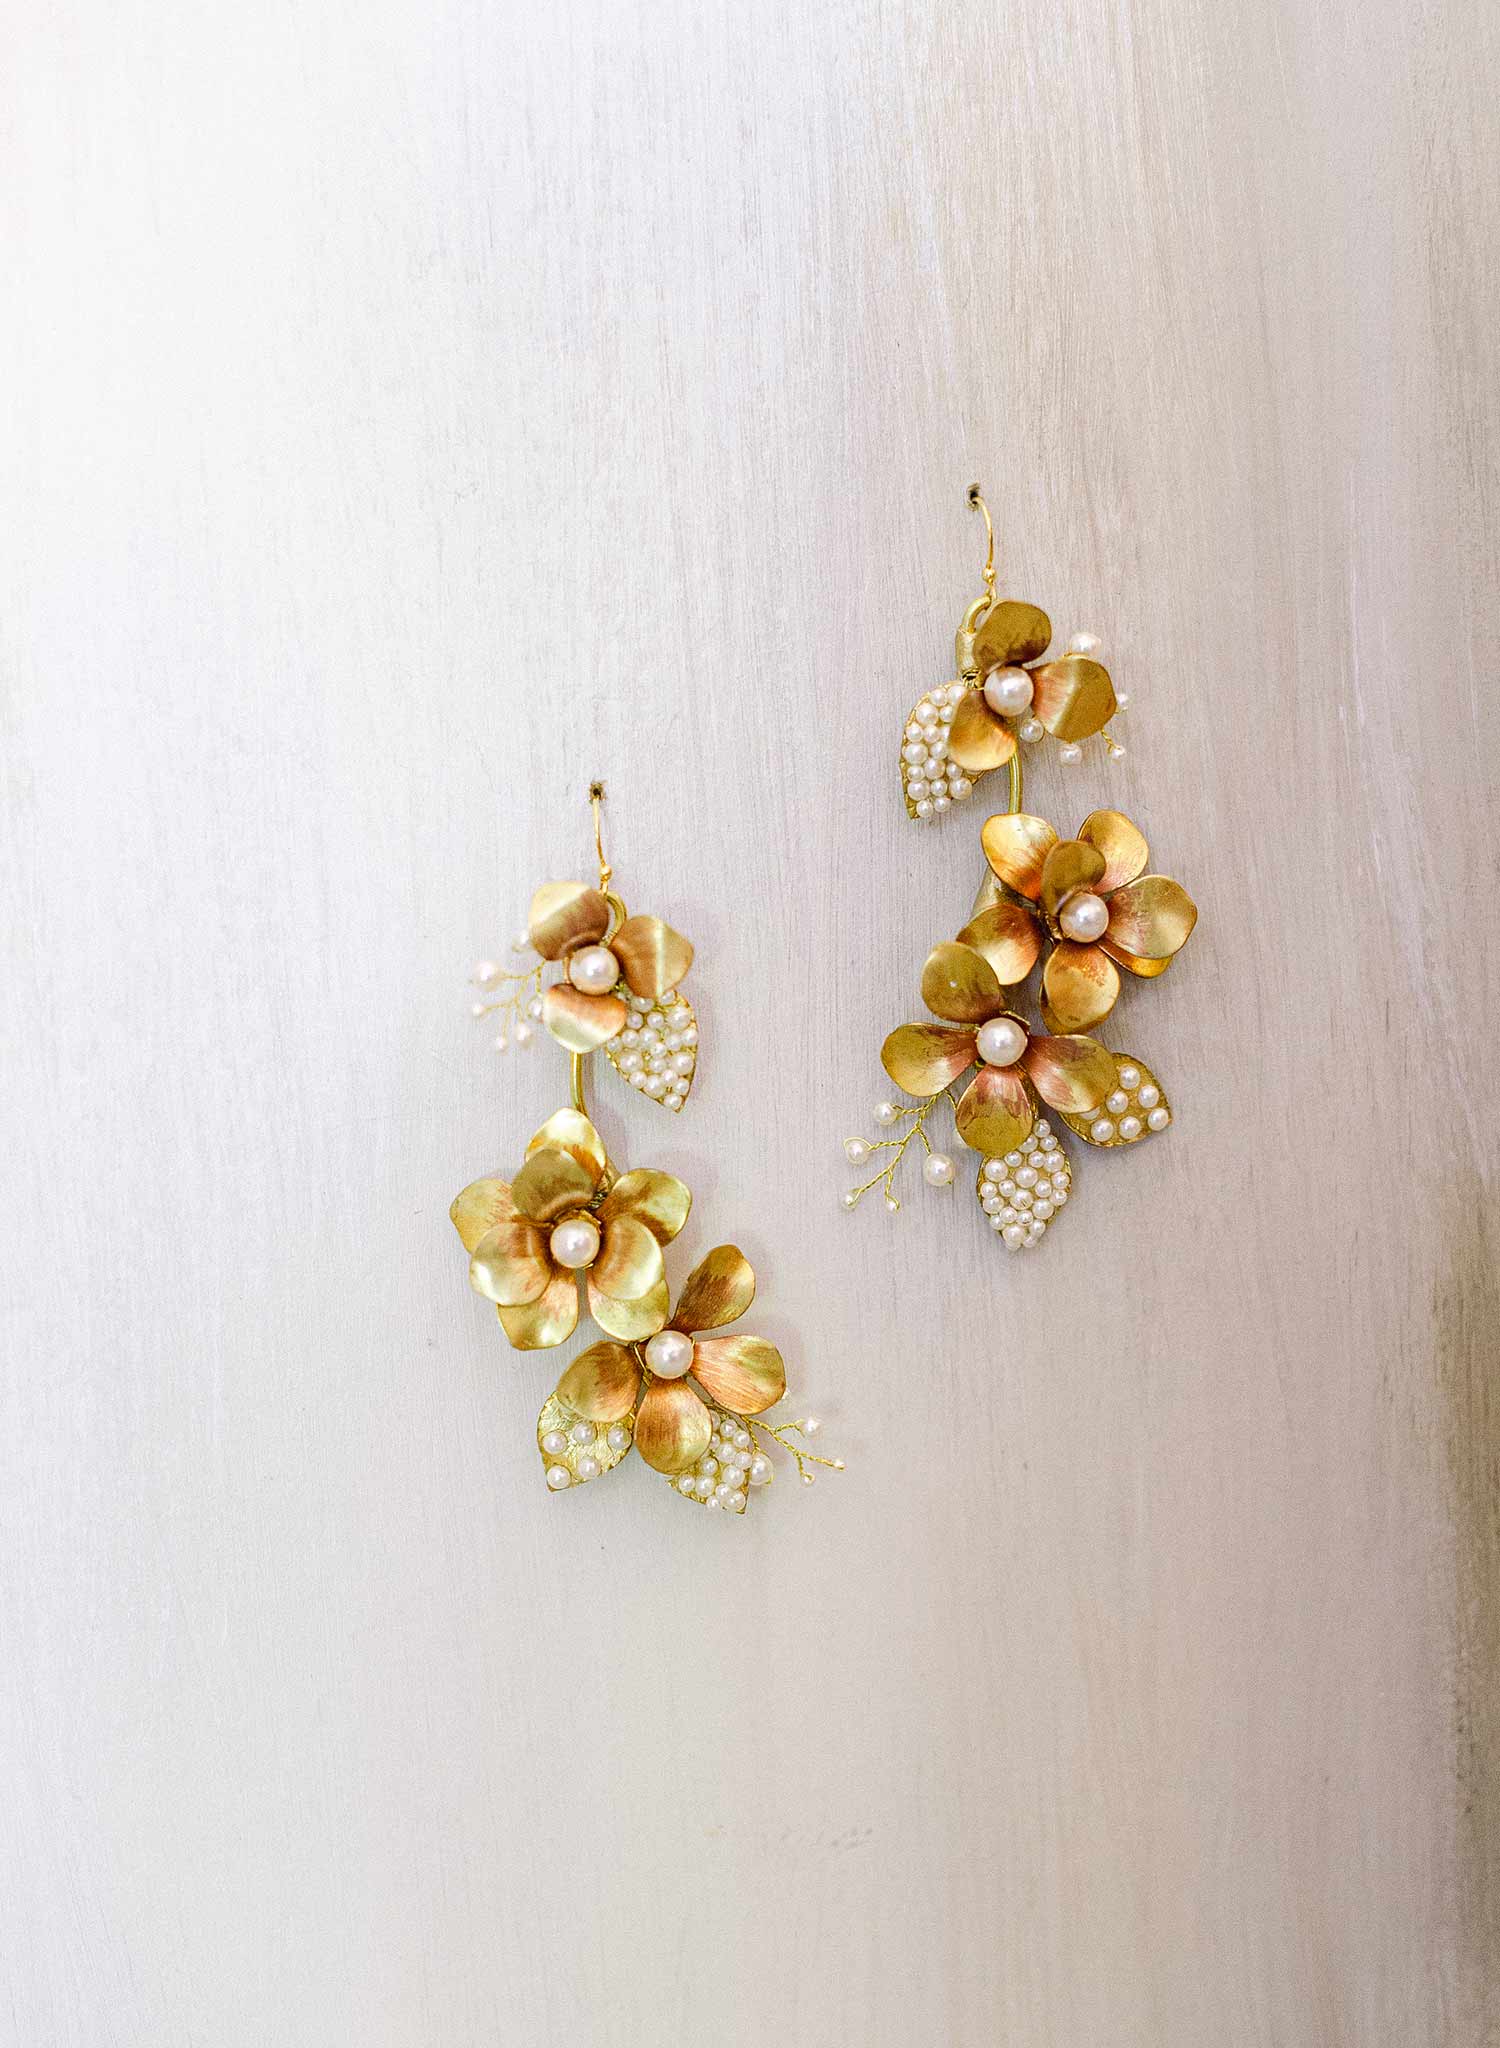 Blooming brass florals chandelier earrings - Style #2312